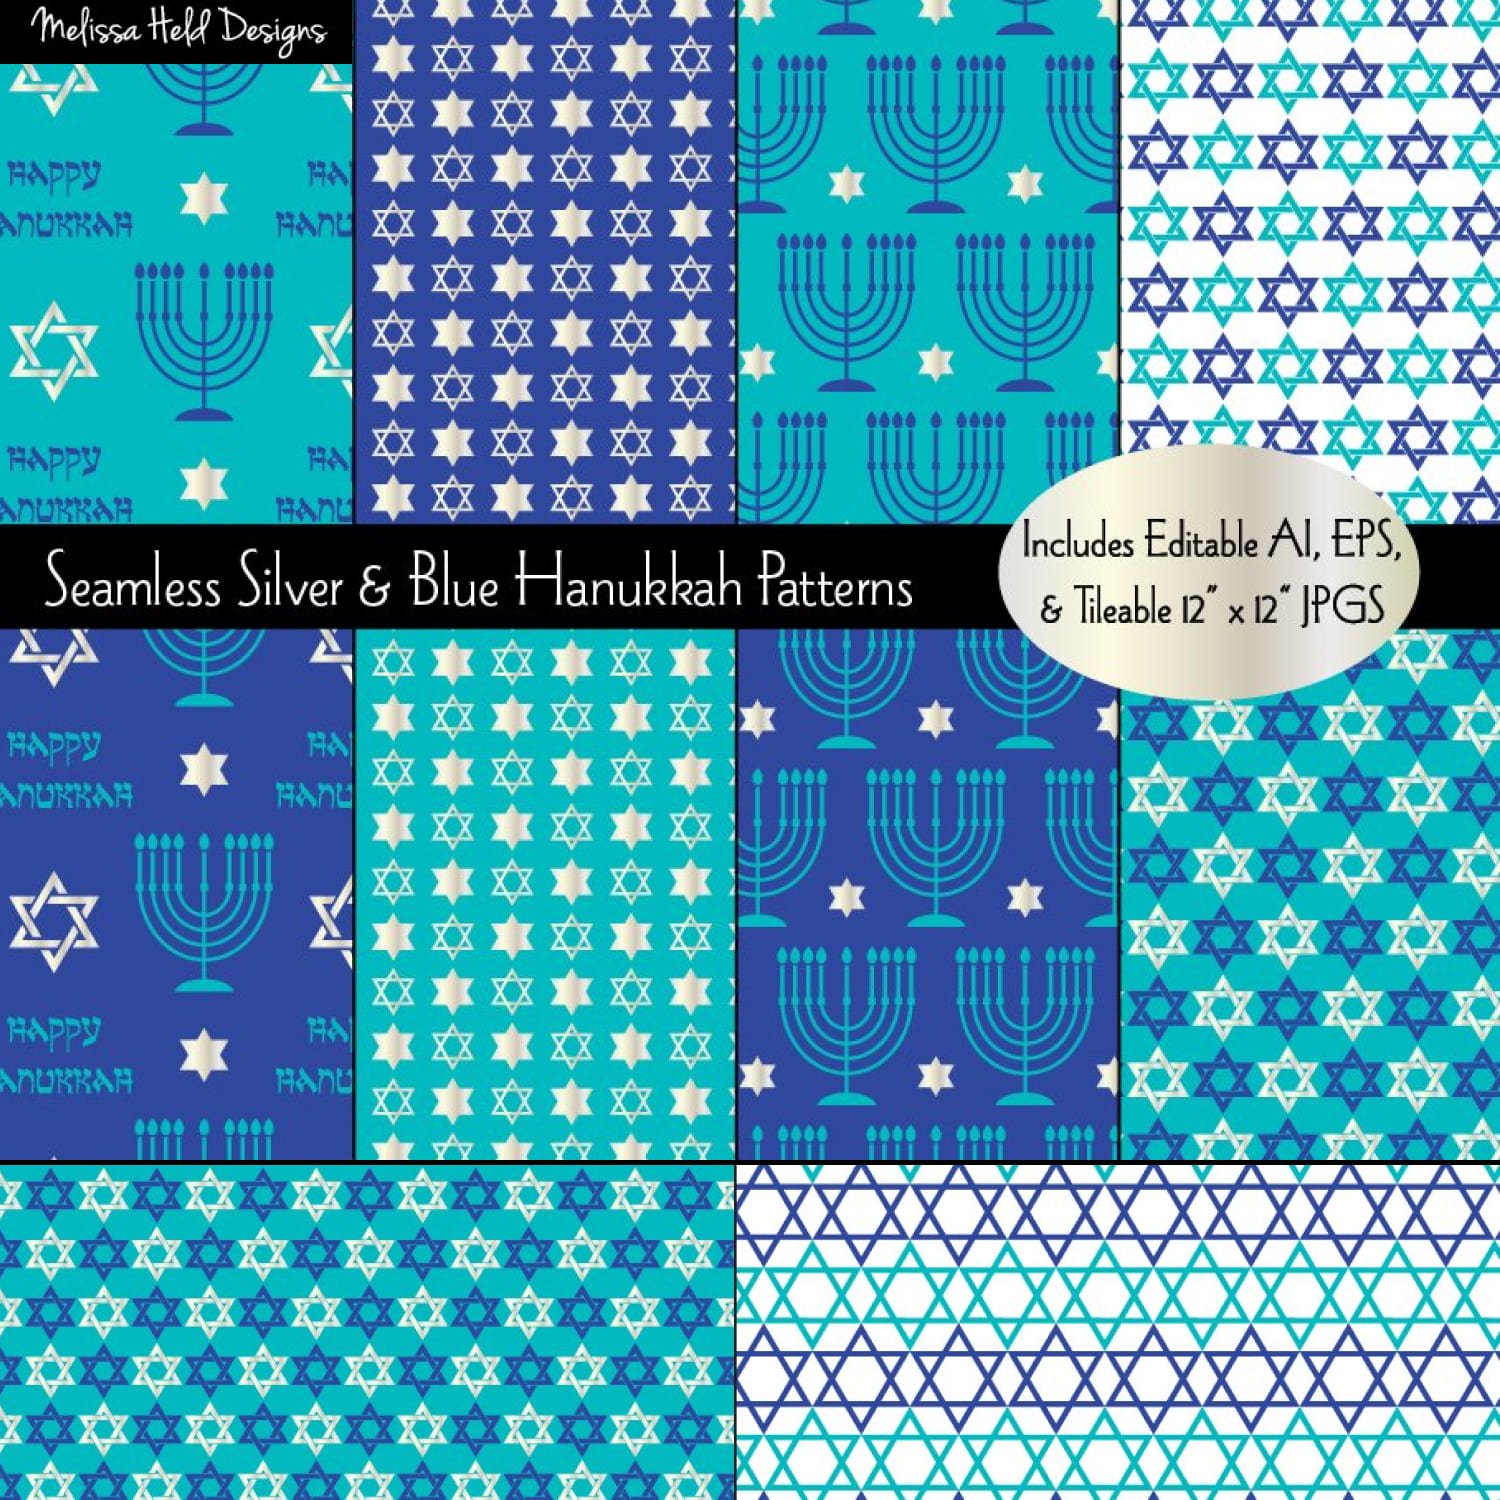 Prints of seamless silver blue hanukkah patterns.